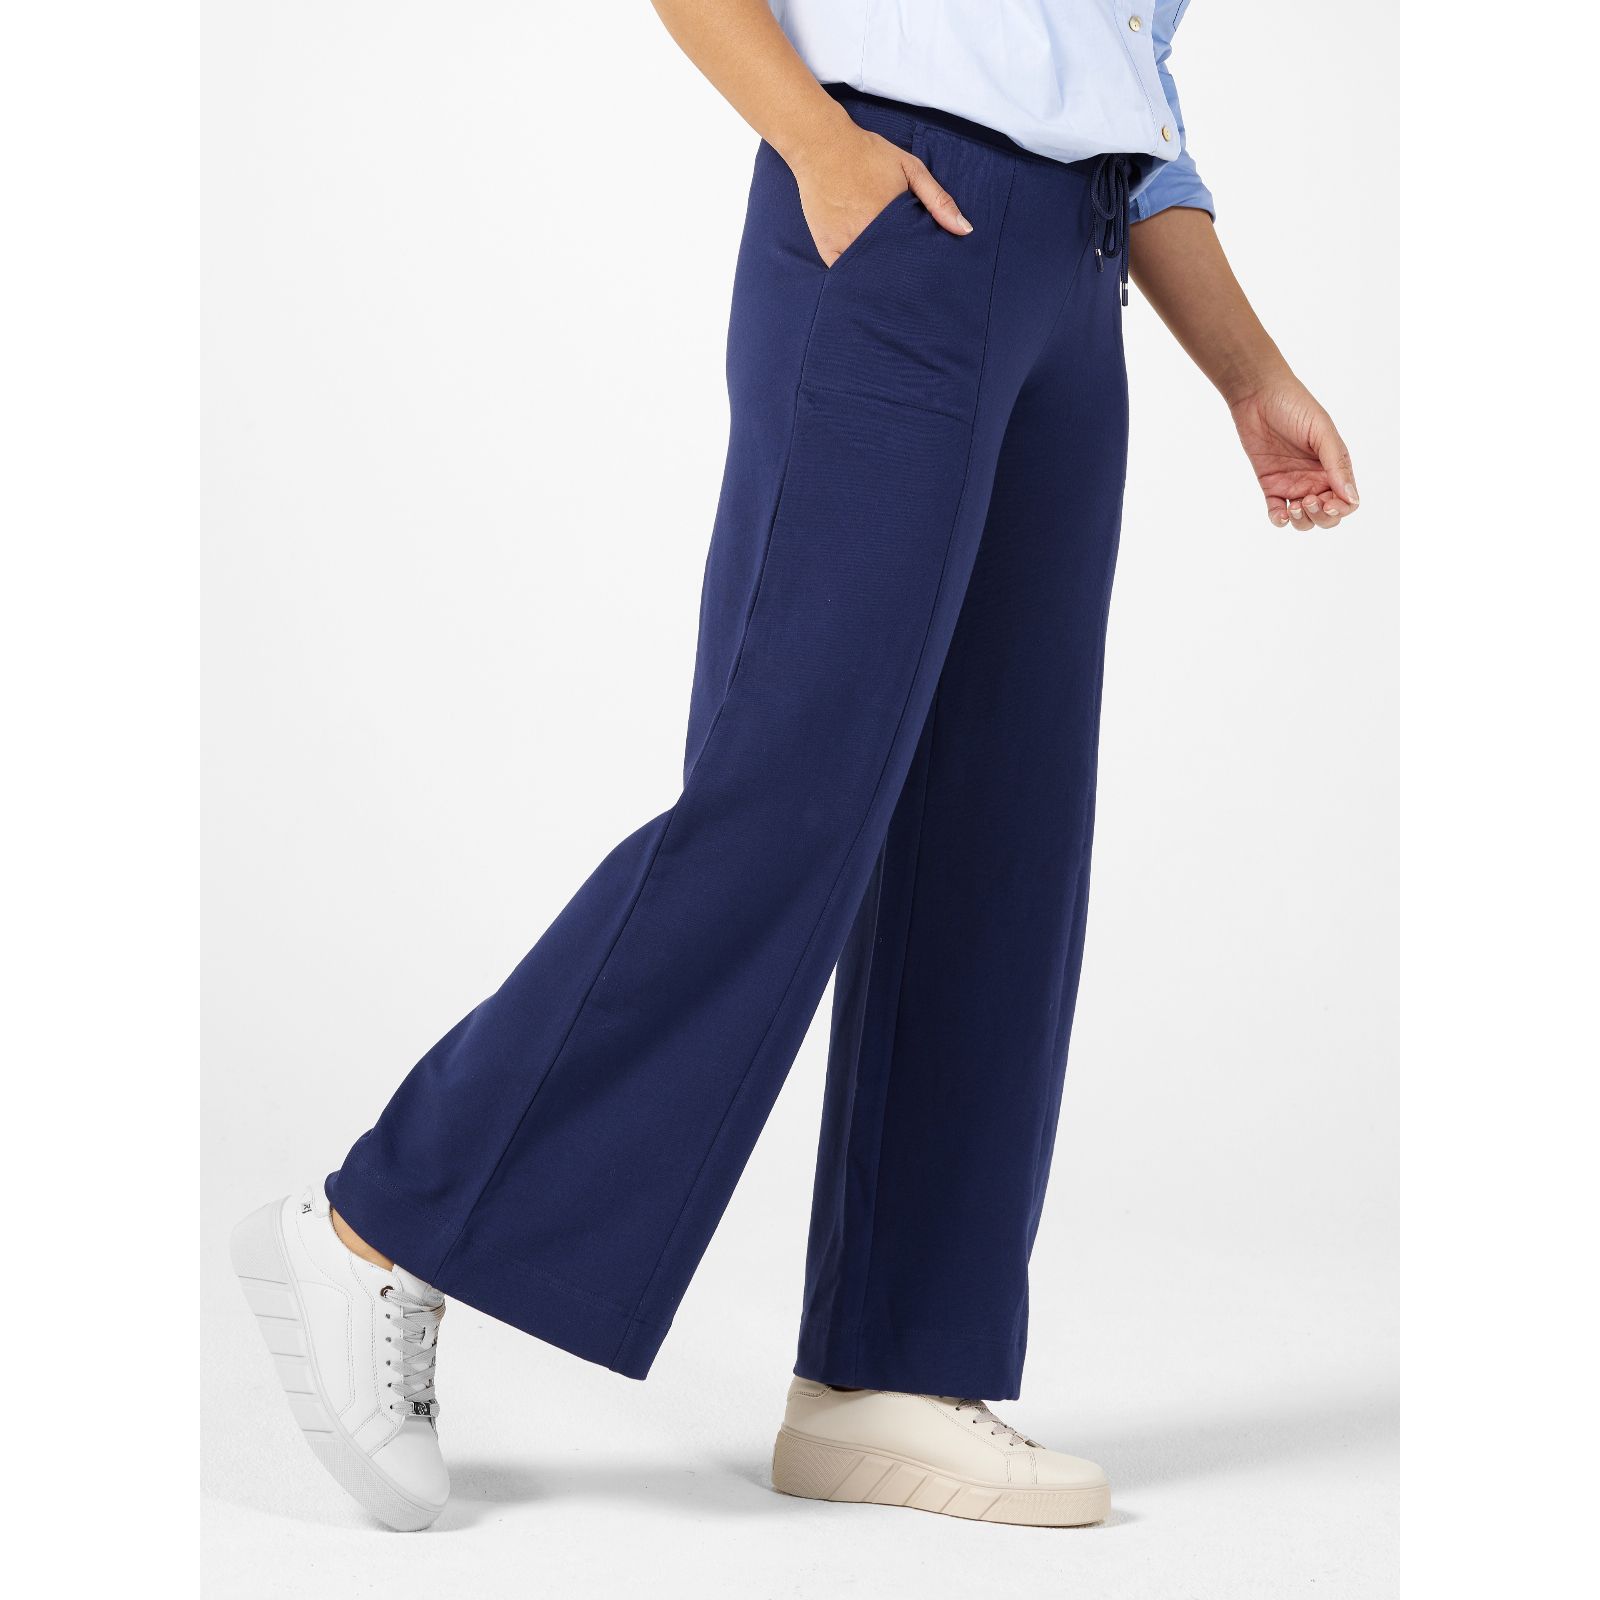 Zen Drawstring Lounge Pants - wide-leg, pull-on trousers - plus